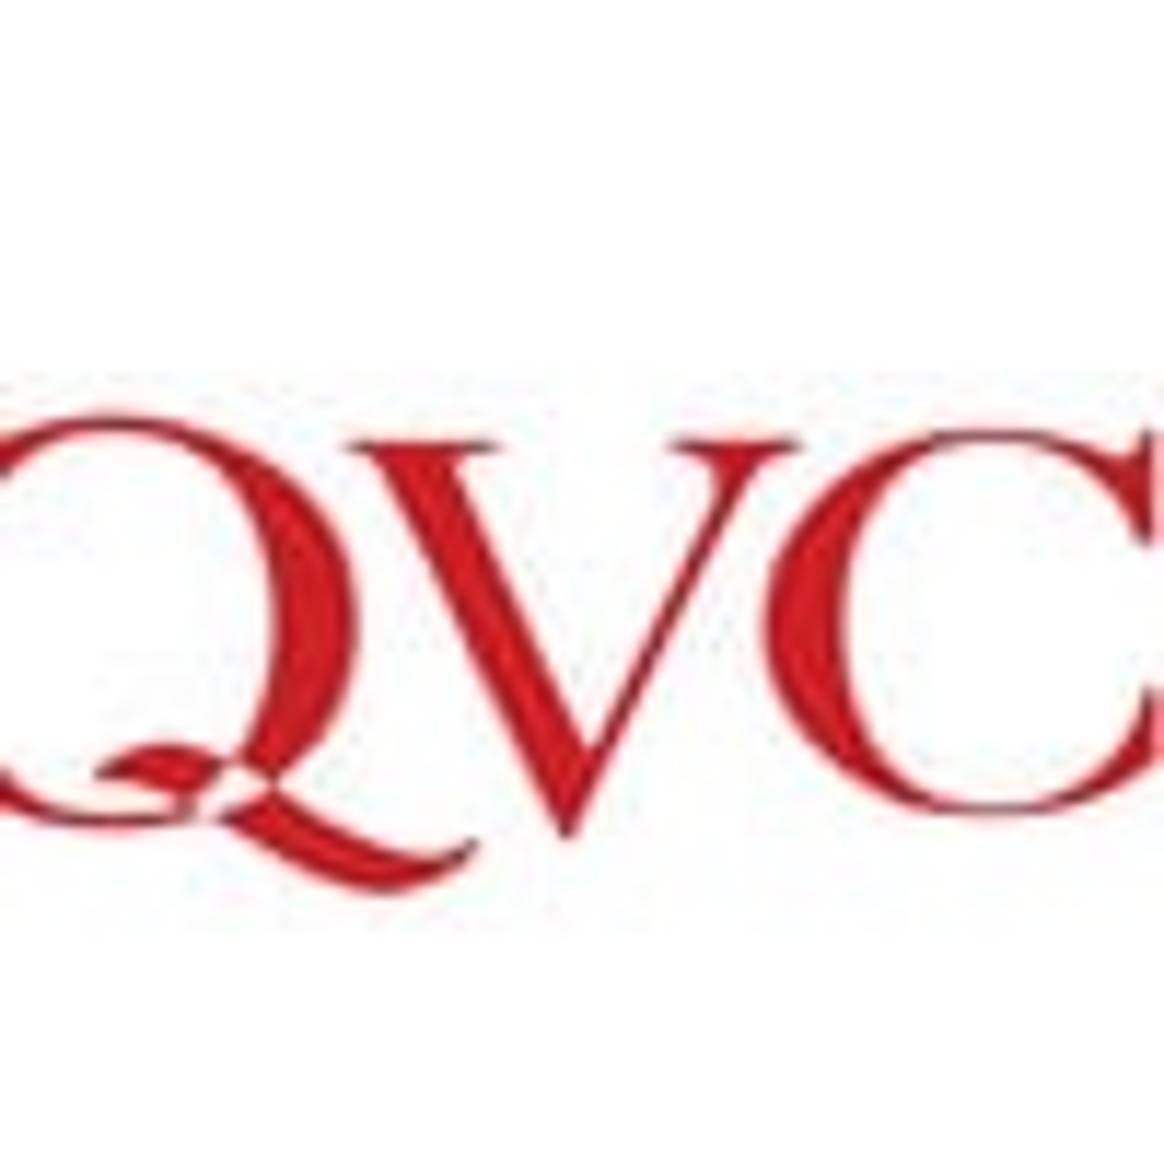 QVC: Neues Haus und neues Personal